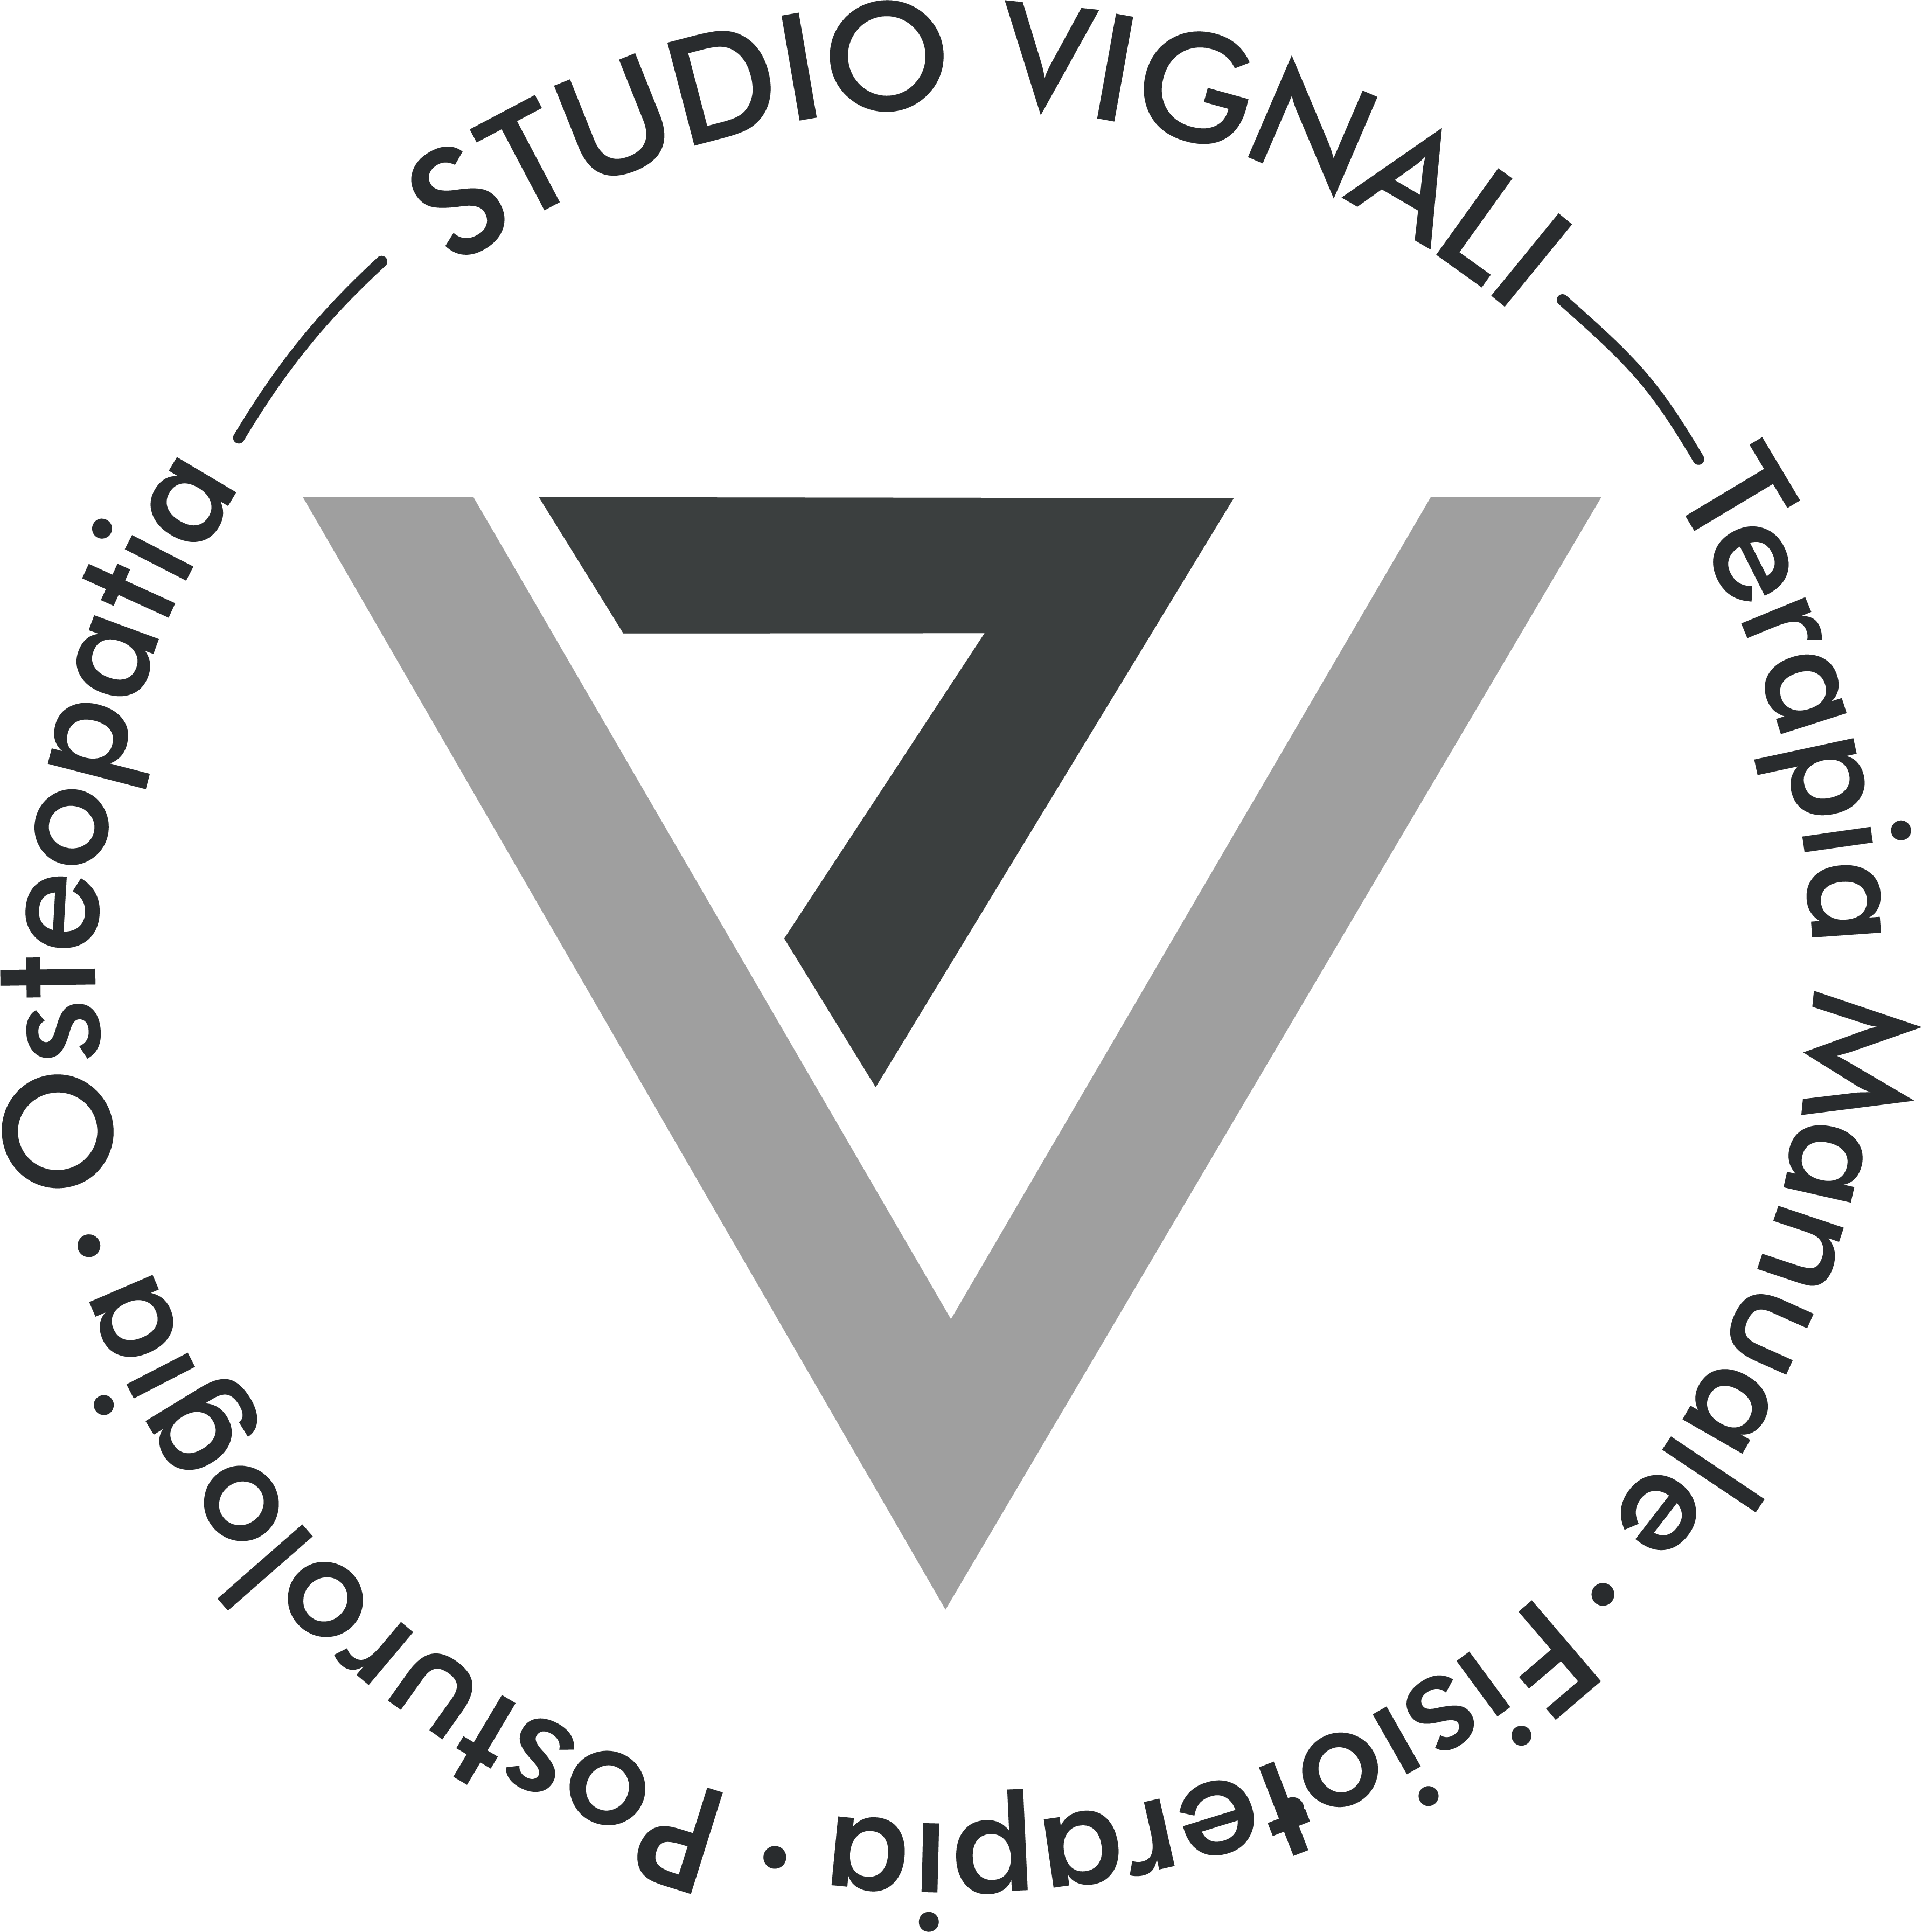 Studio Vignali